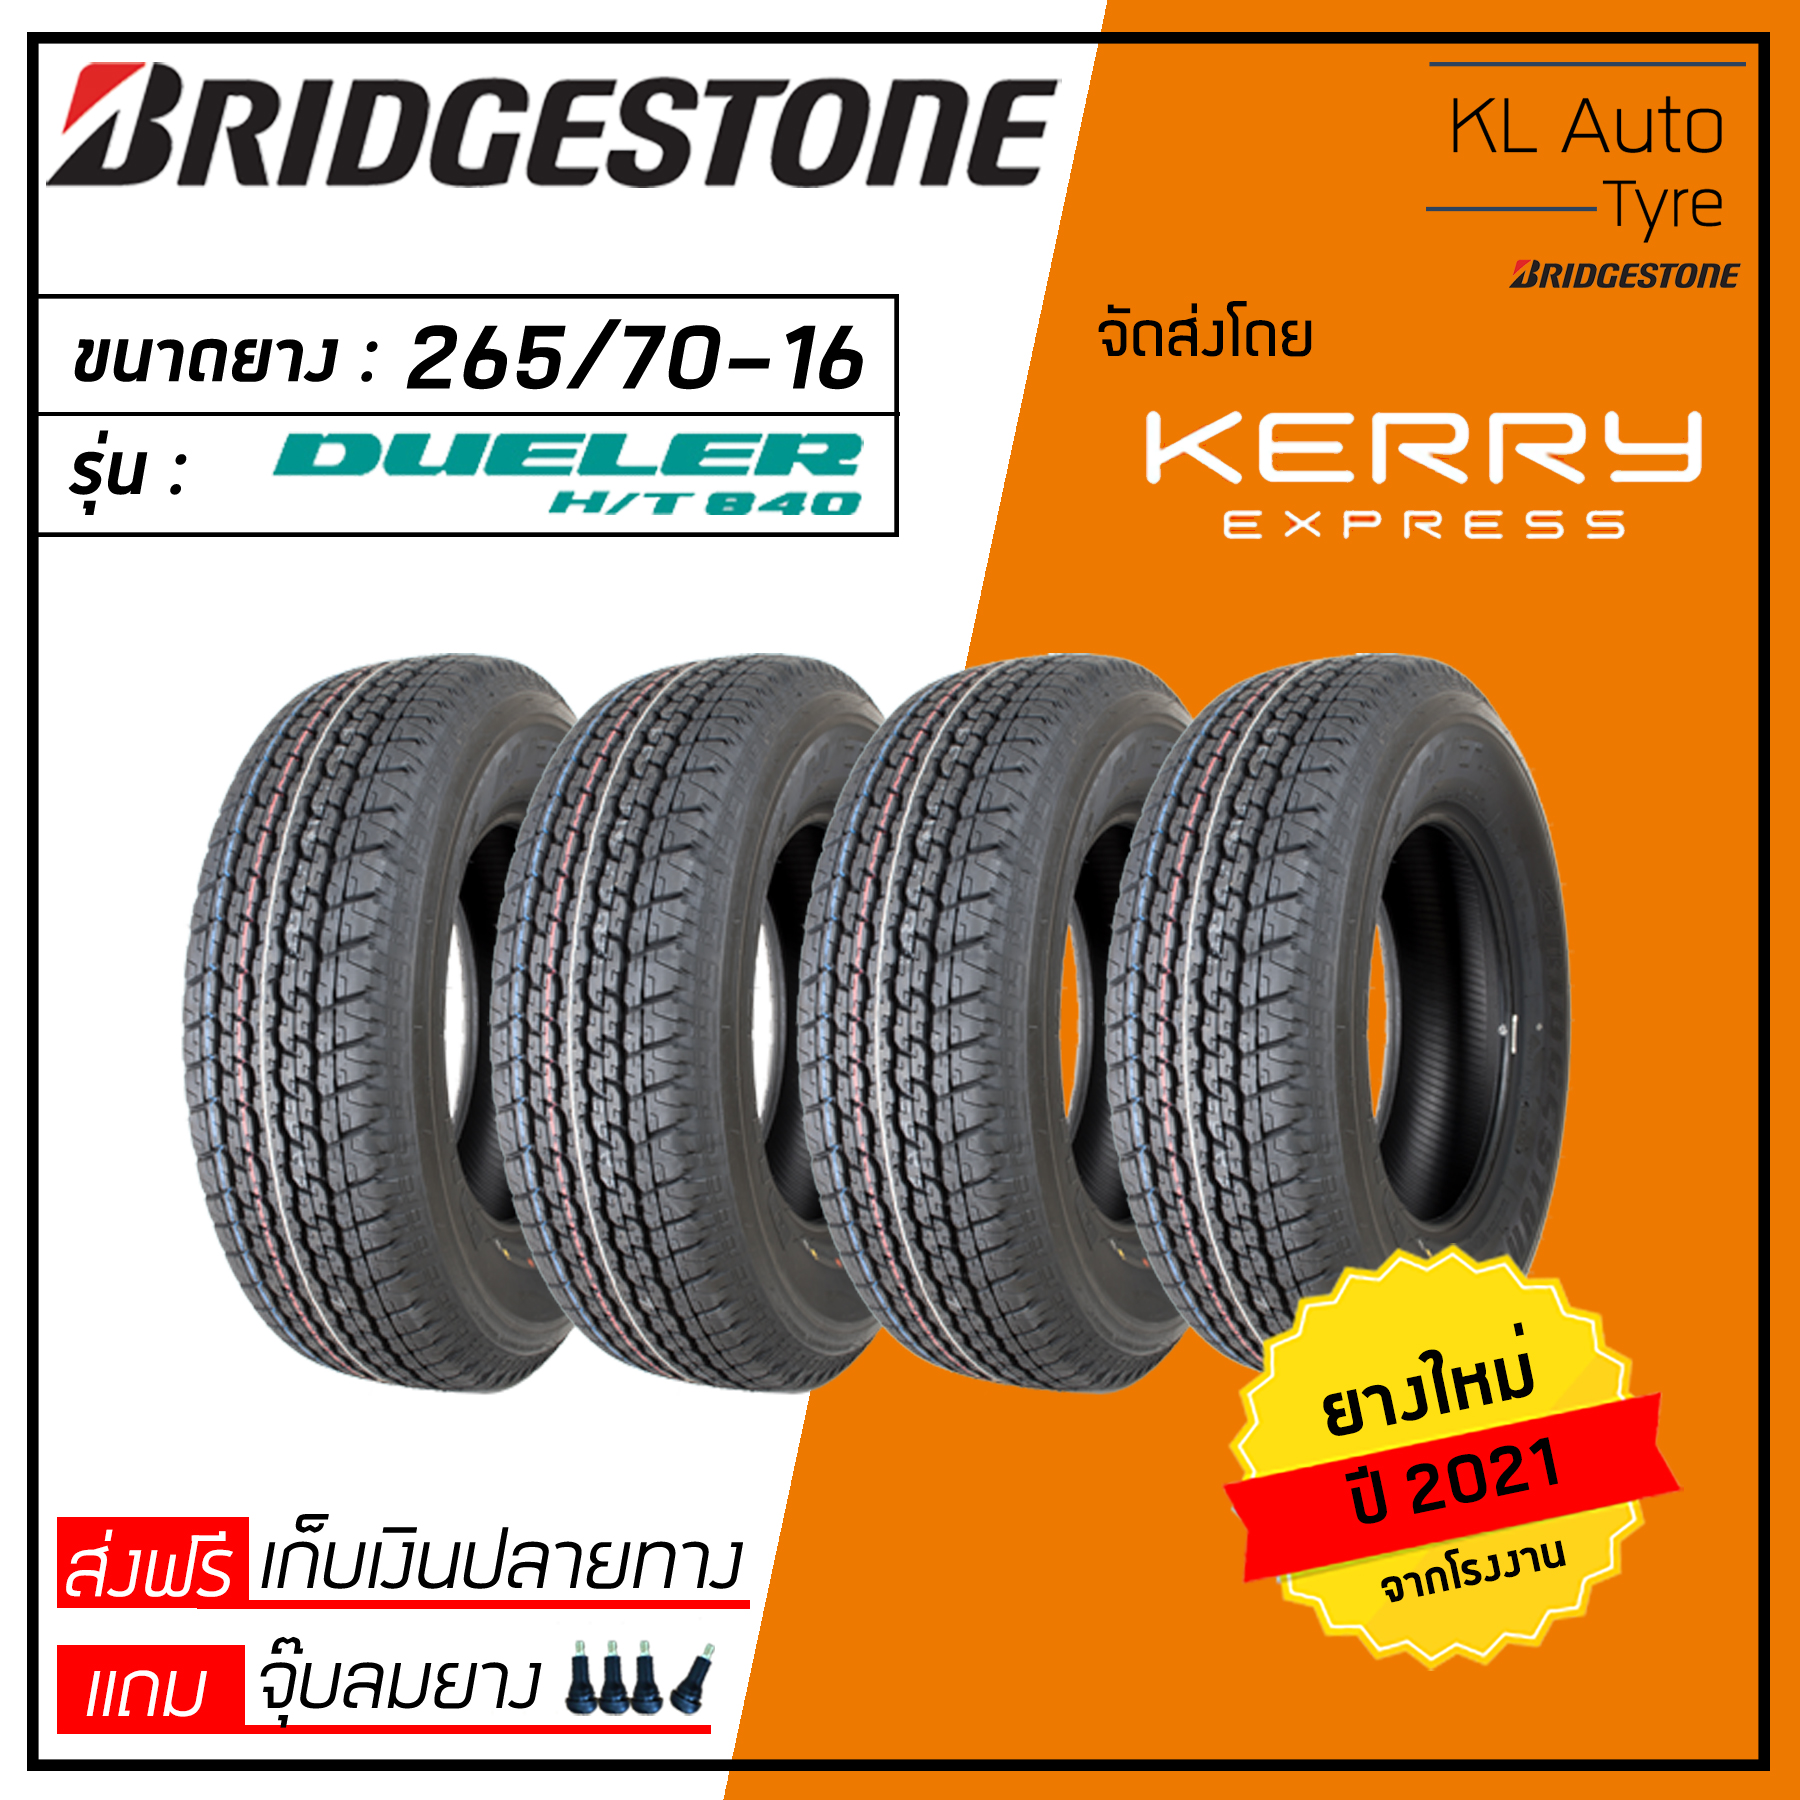 Bridgestone 265/70-16 D840 4 เส้น ปี 21 (ฟรี จุ๊บยาง 4 ตัว มูลค่า 200 บาท)